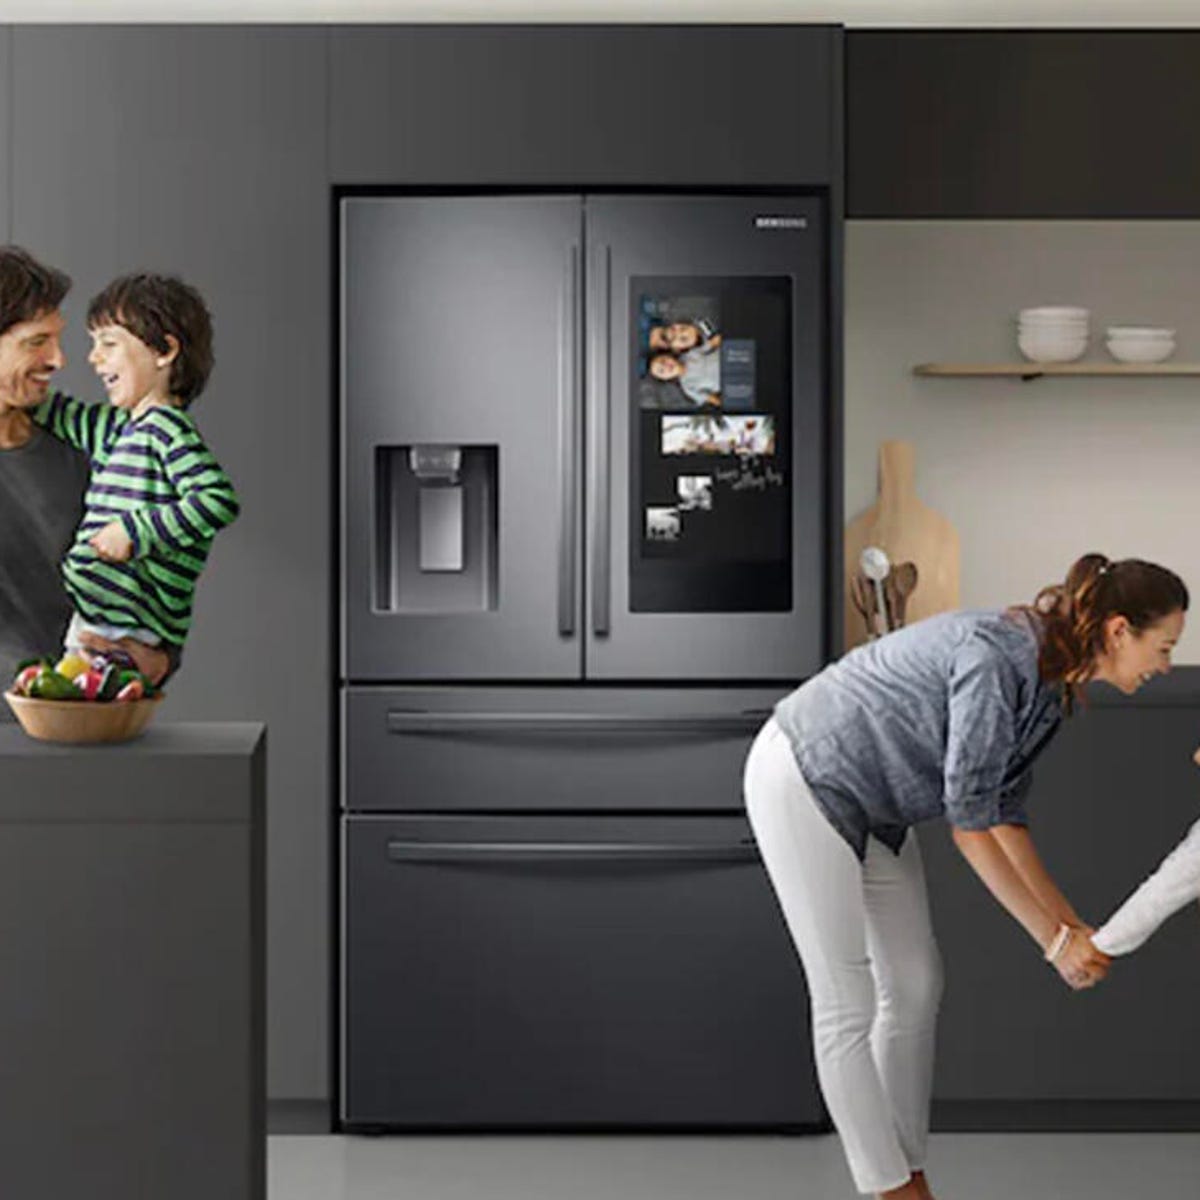 The 5 best refrigerators of 2022